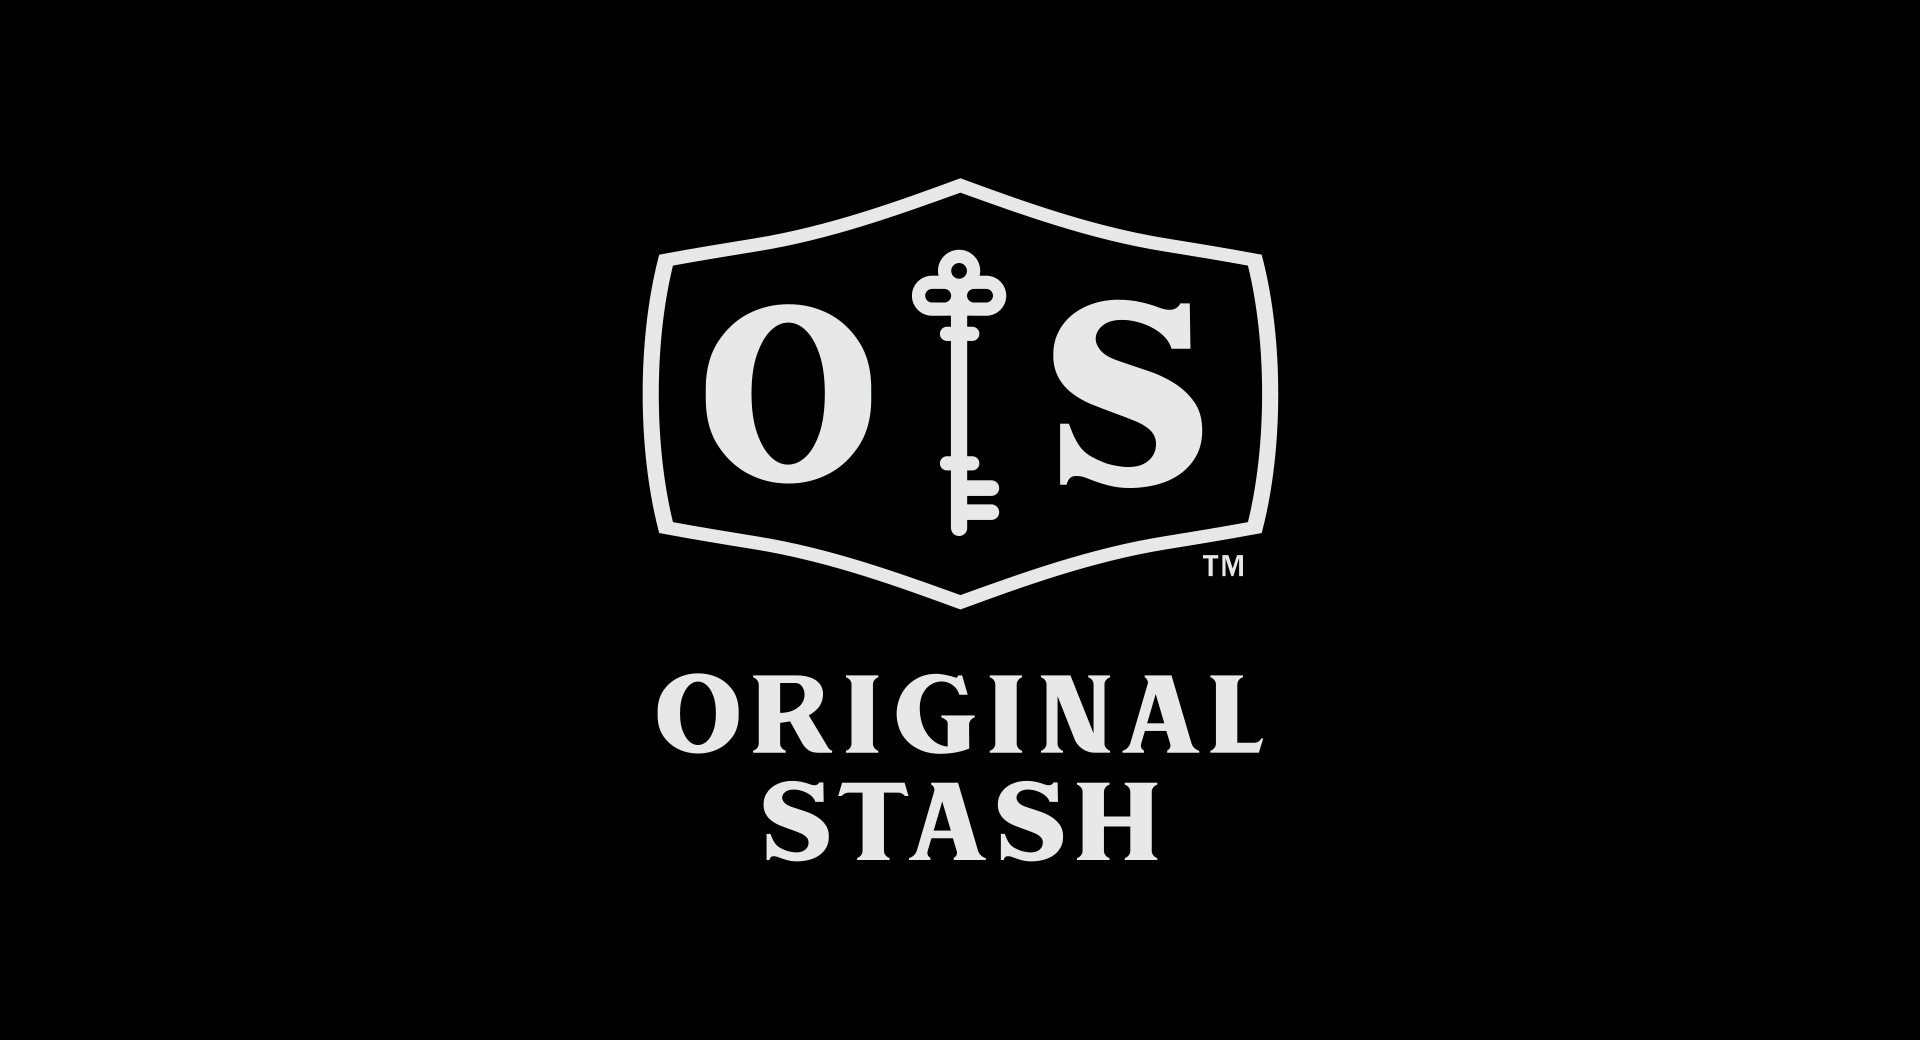 HEXO's Original Stash logo